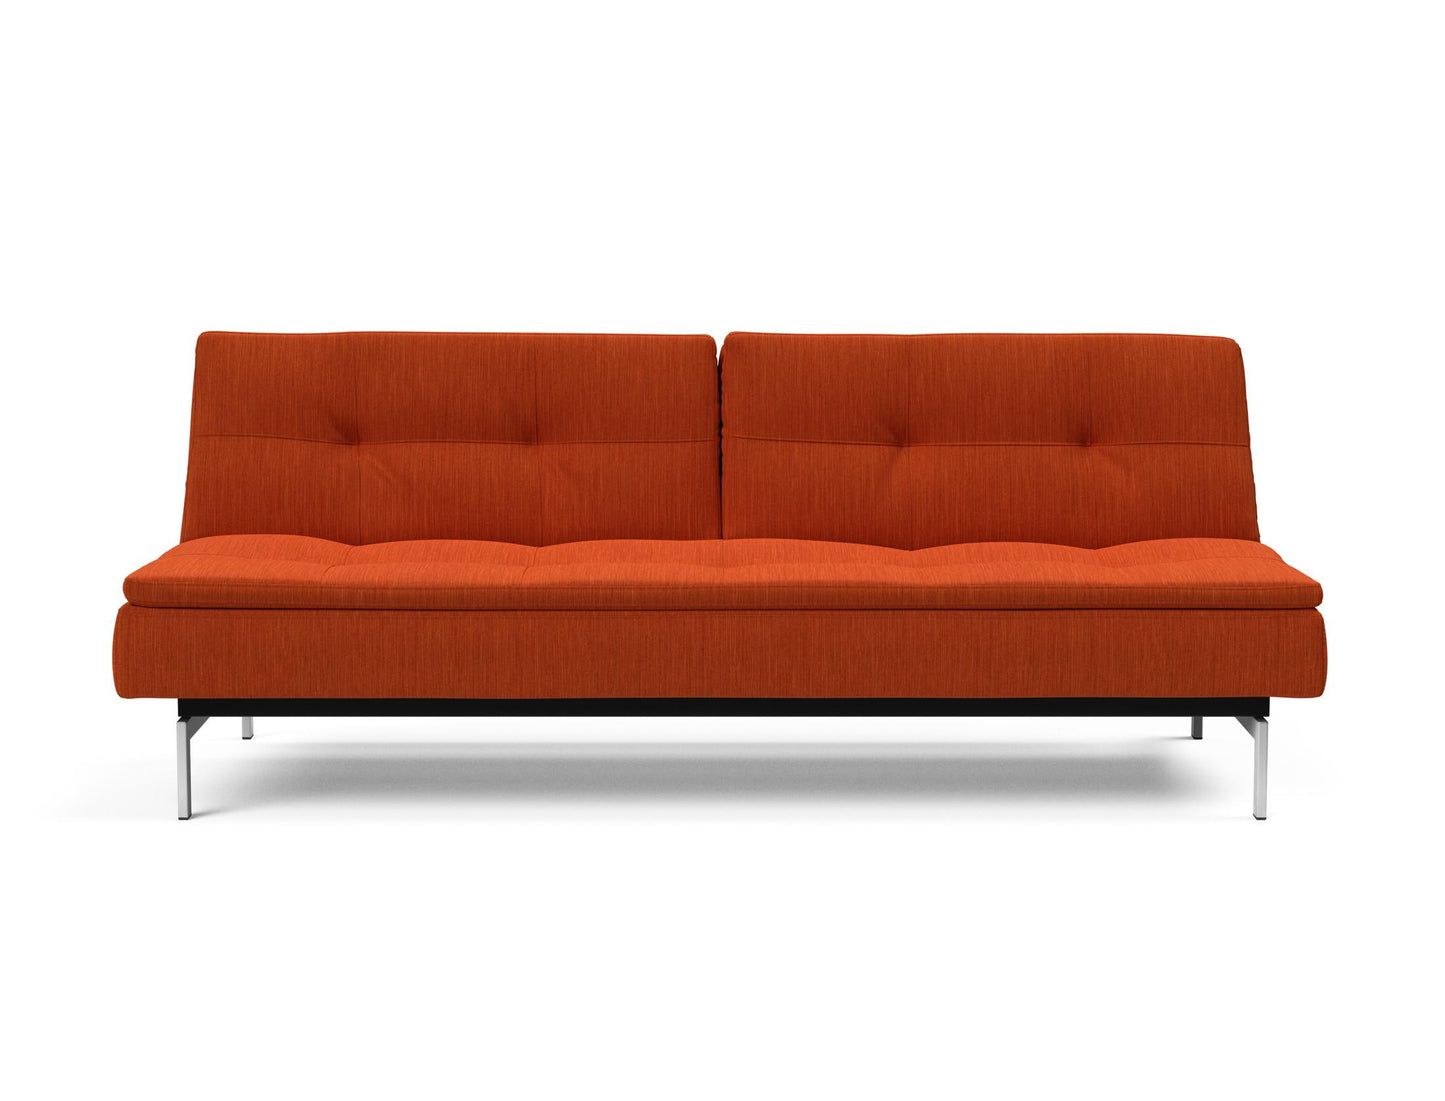 Dublexo Sofa with Stainless Steel Legs